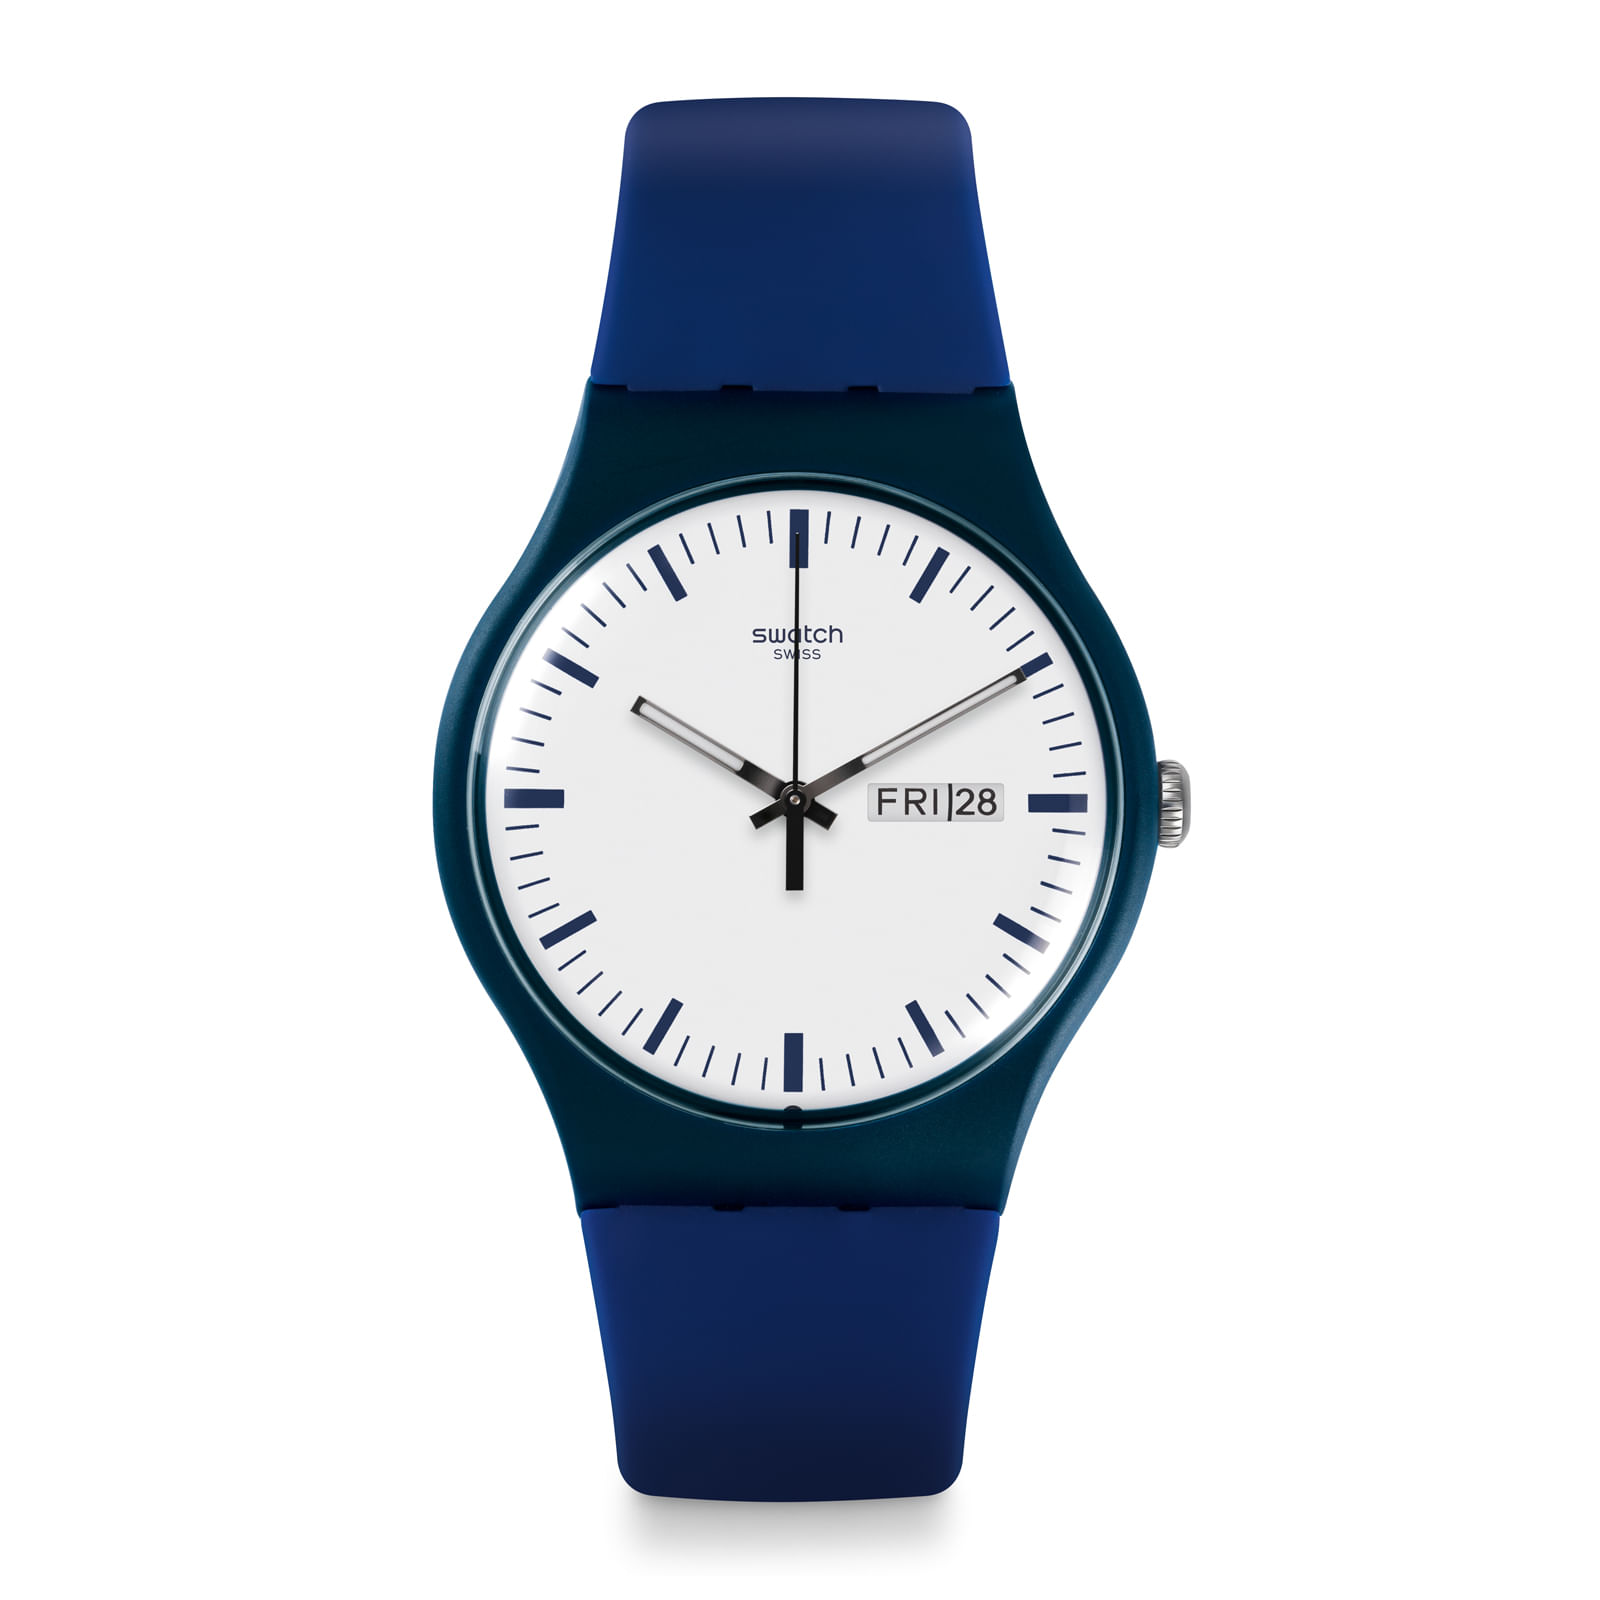 Reloj SWATCH BELLABLU SUON709 Azul